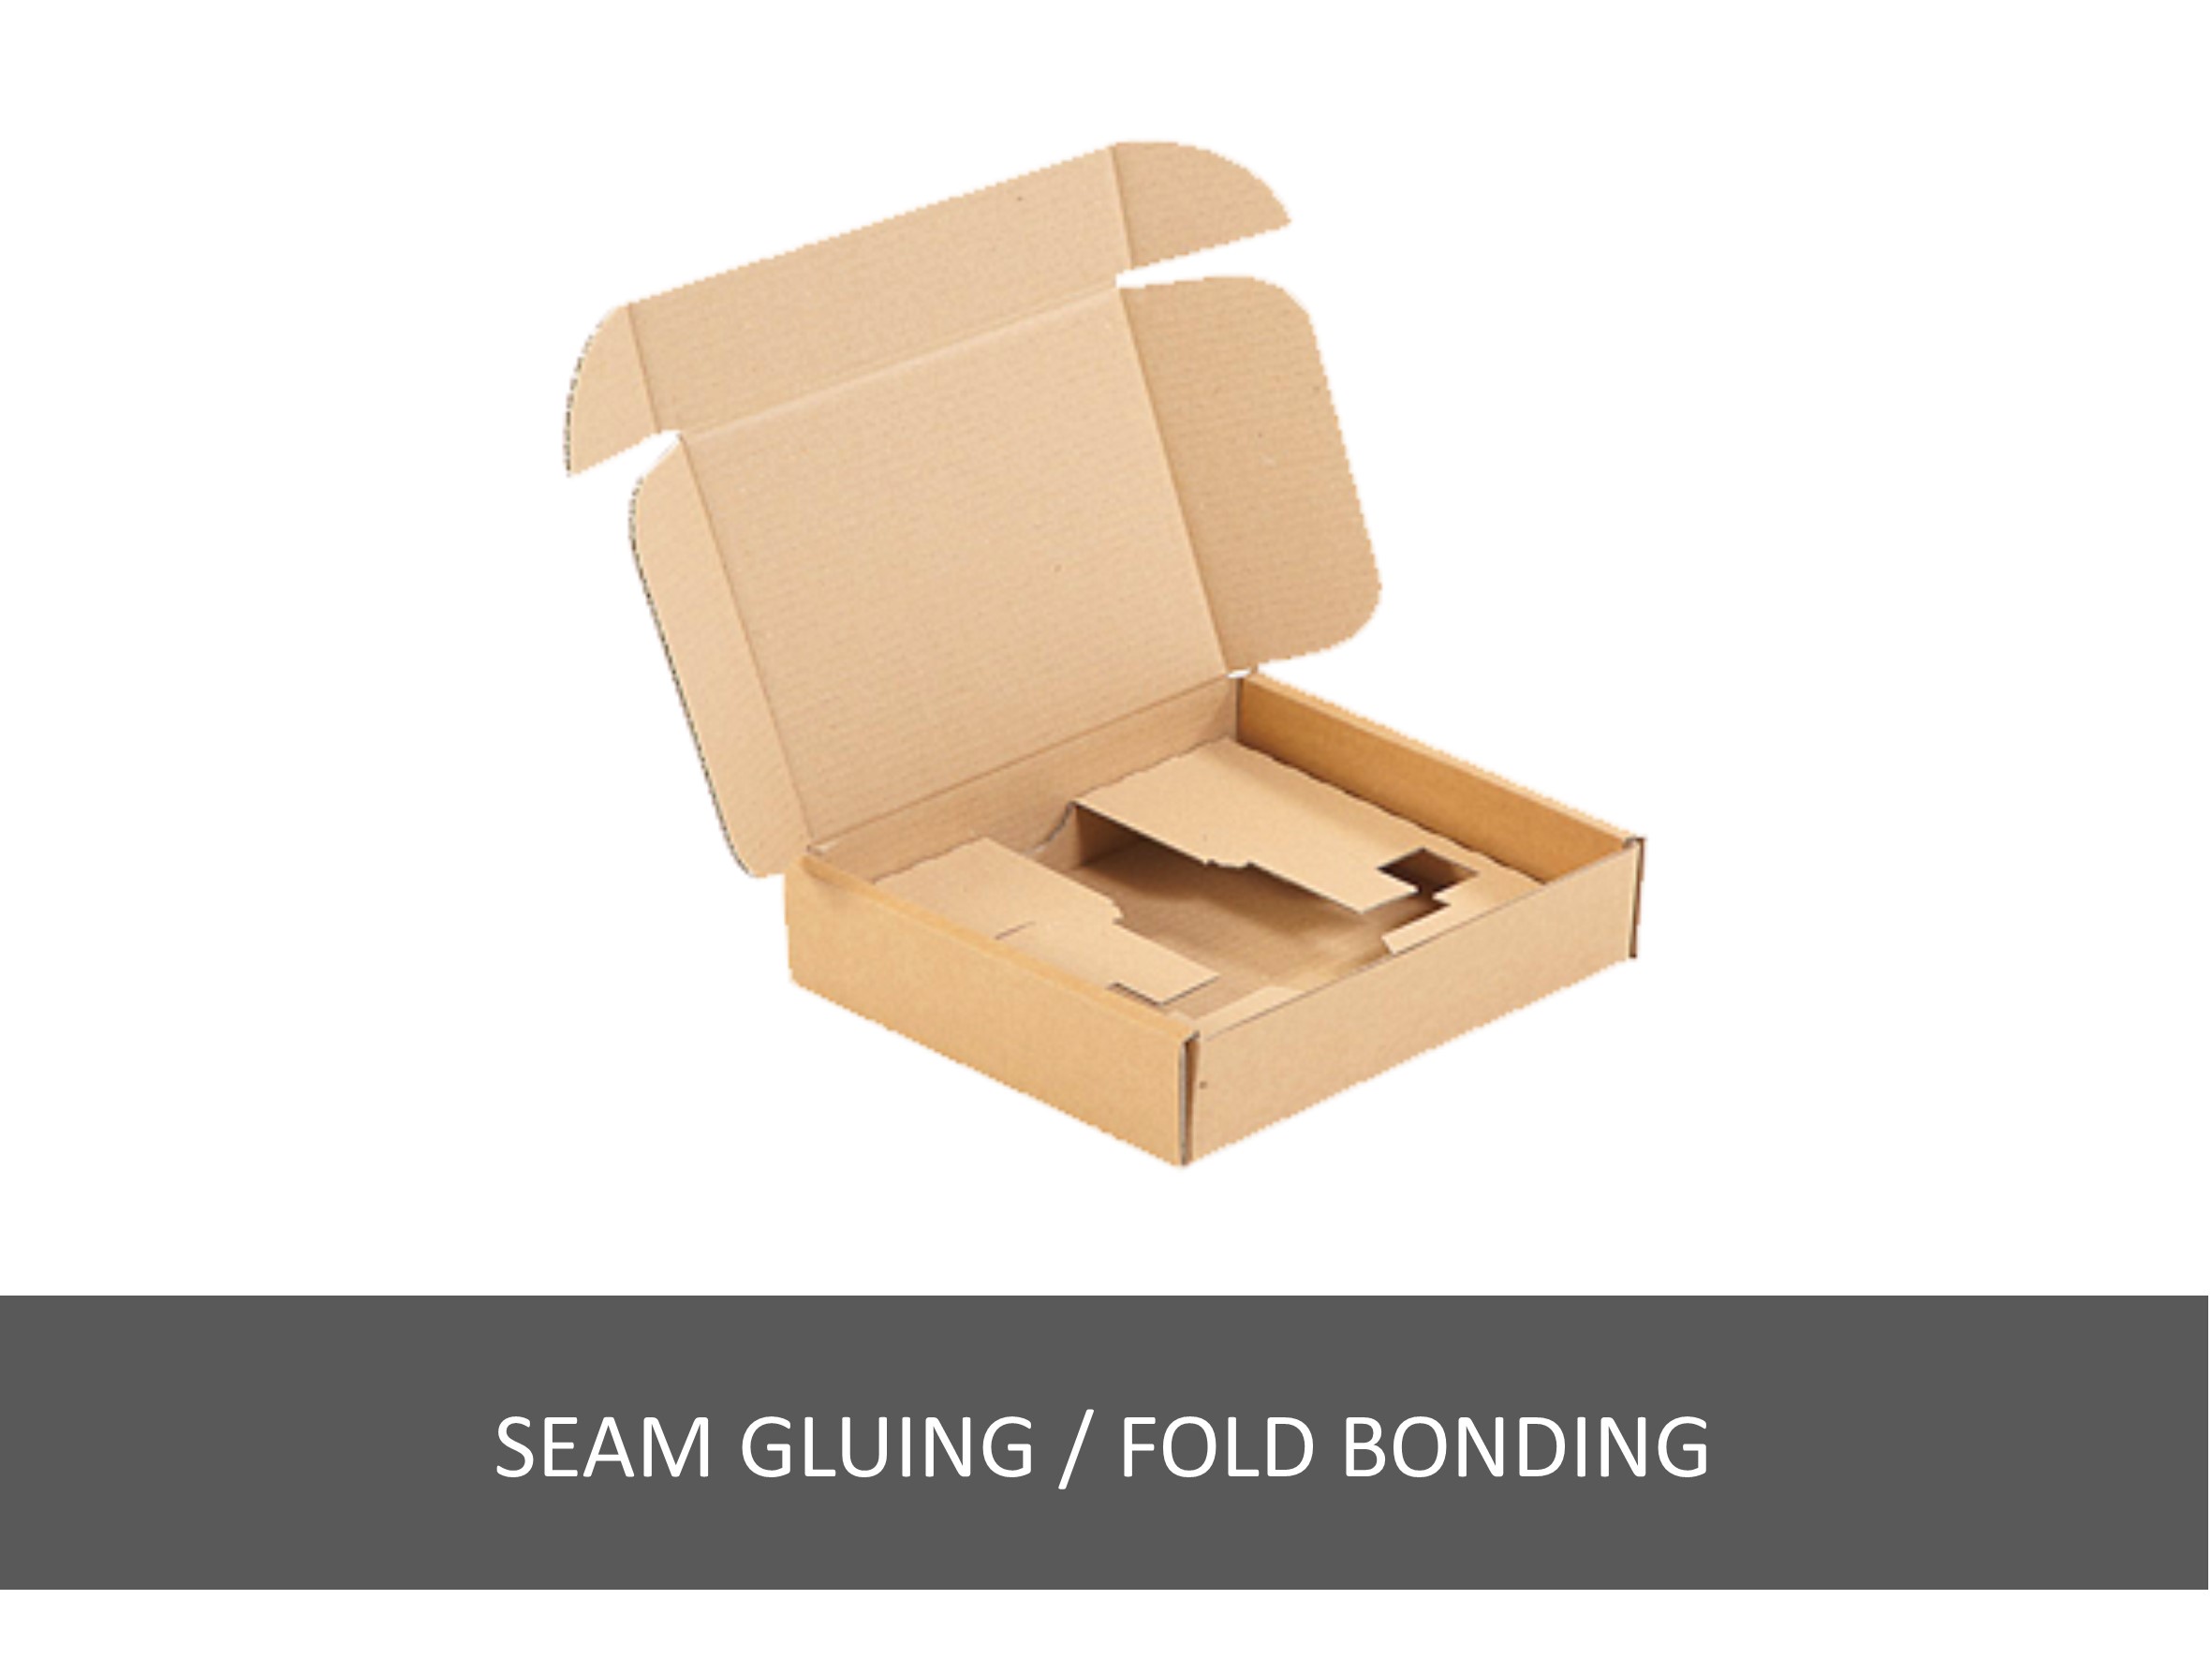 Seam gluing / fold bonding